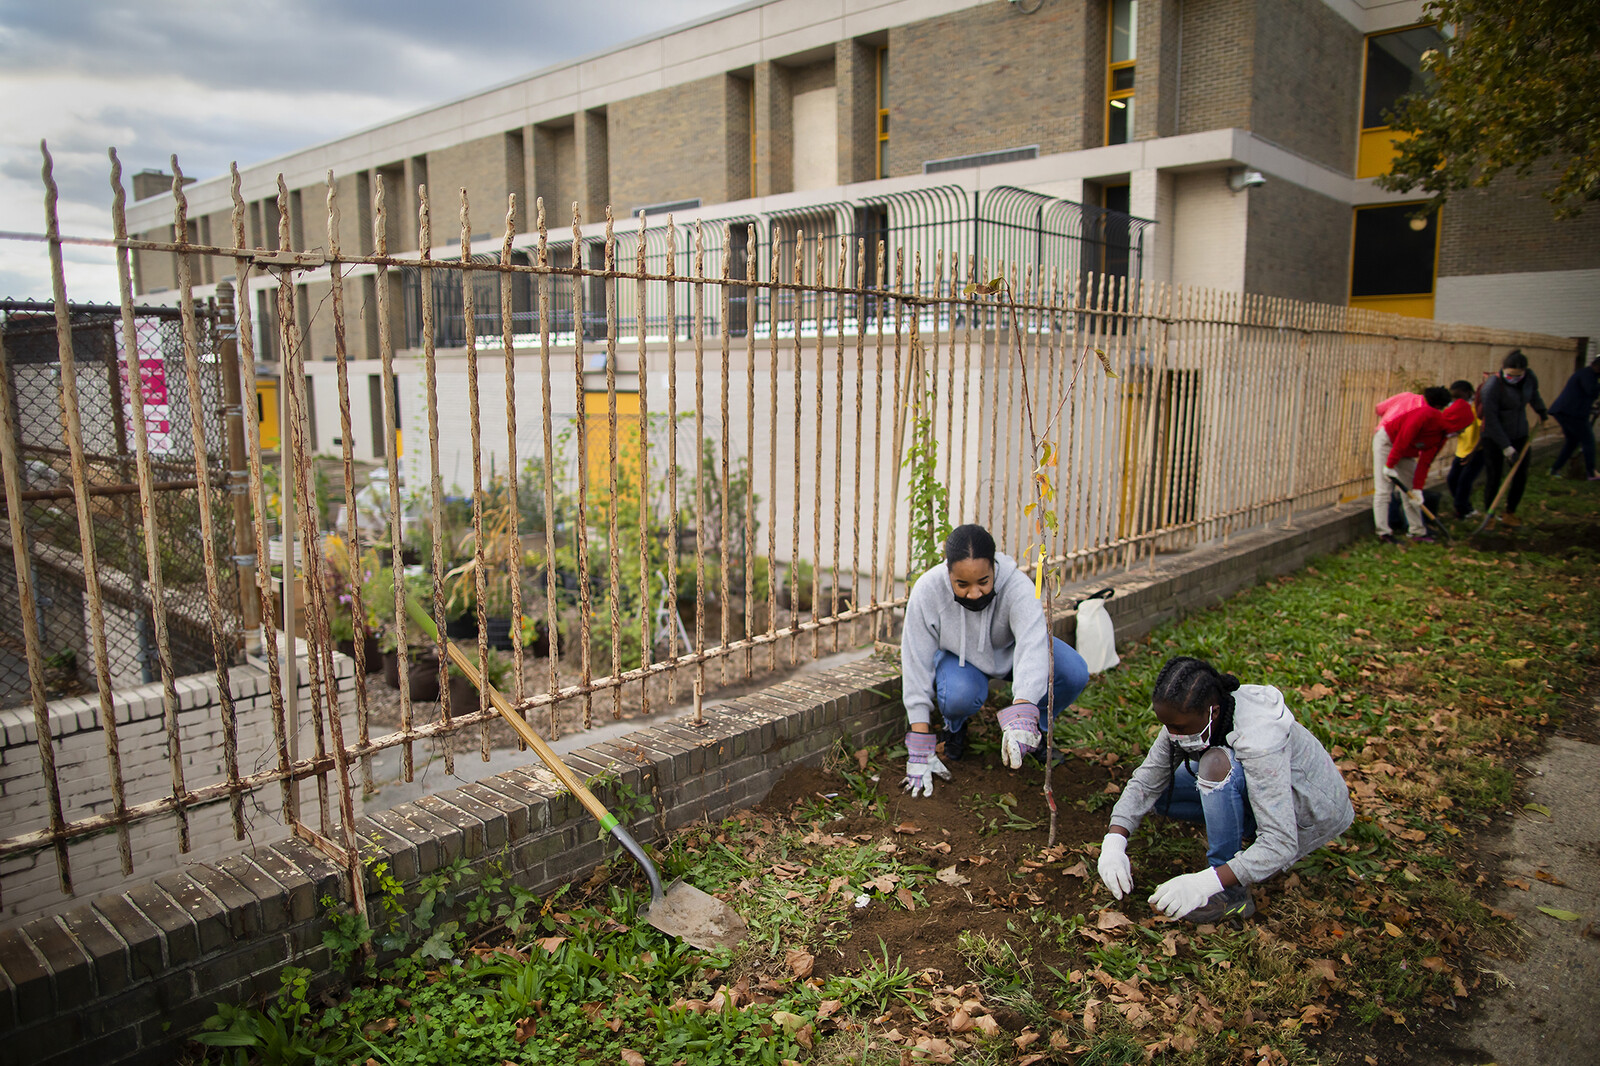 students gardening in a school